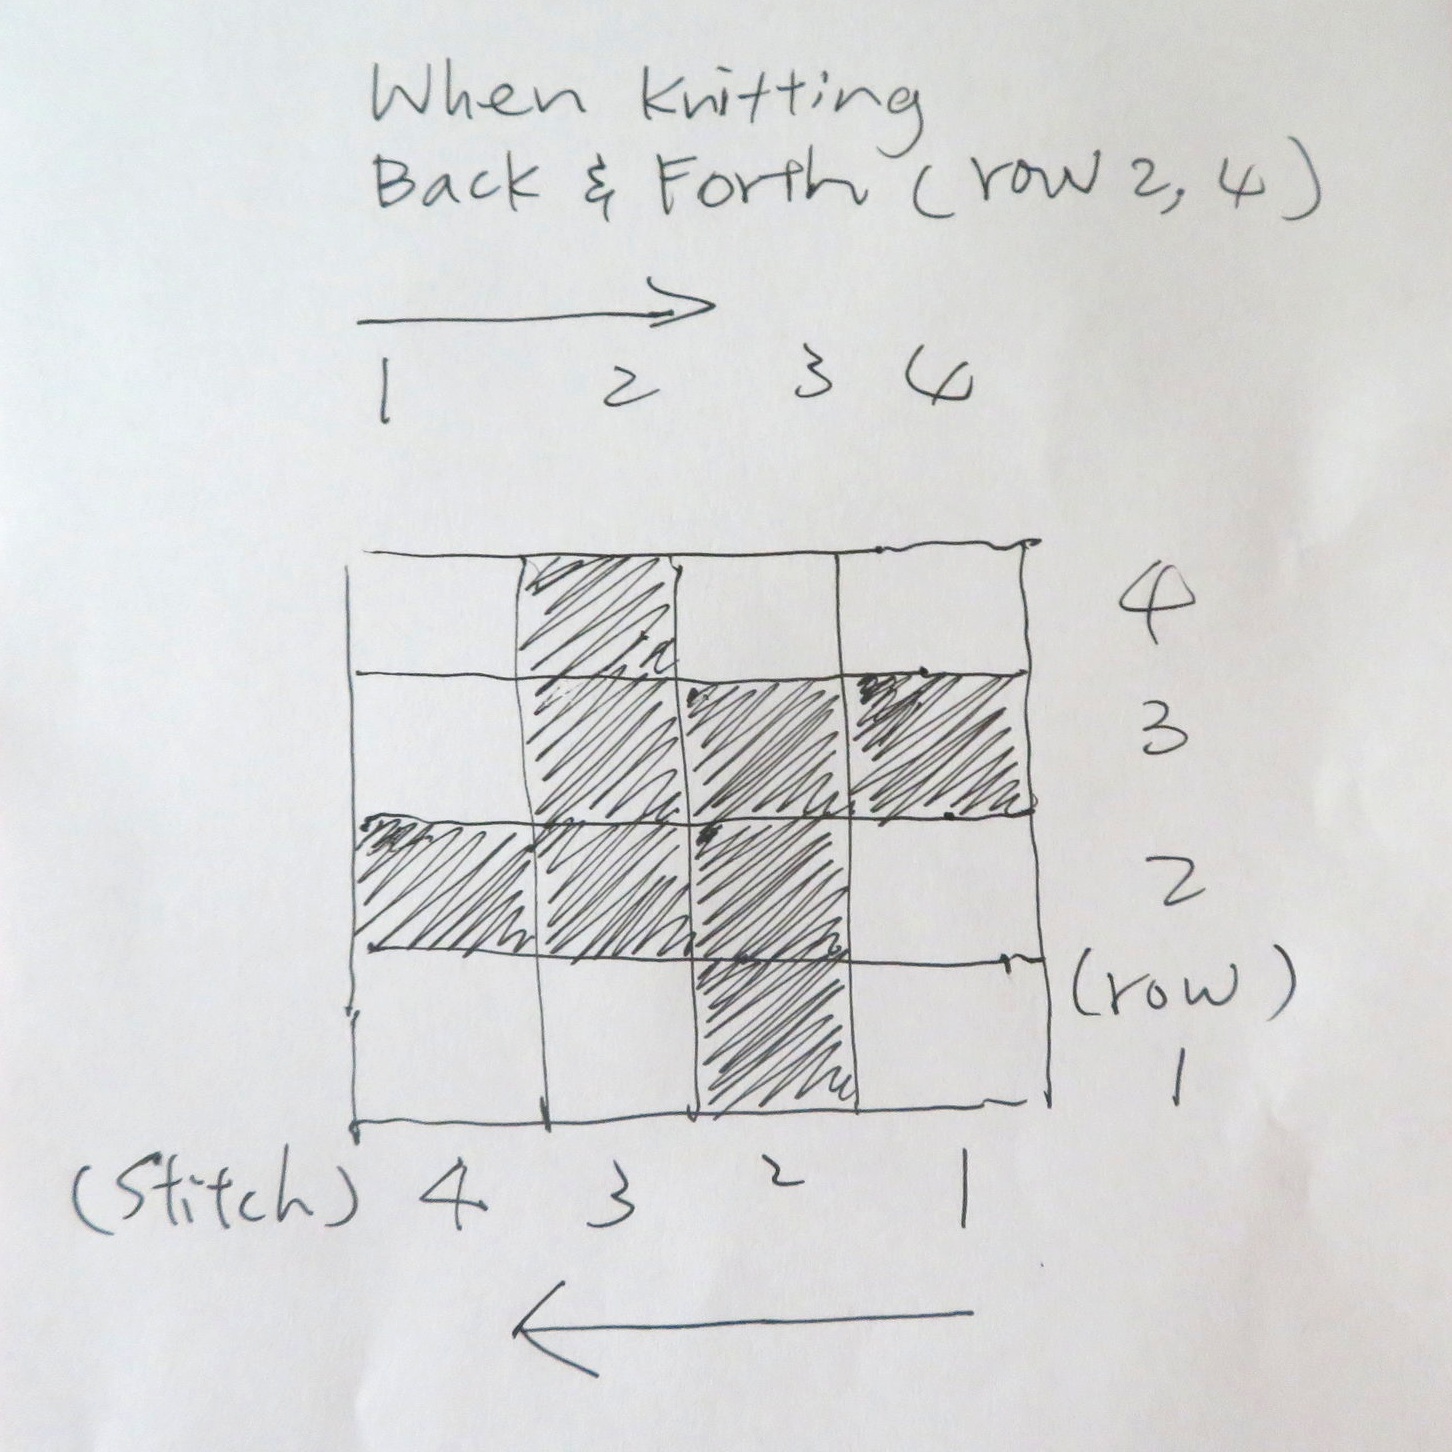 Houndstooth Knitting Pattern Chart